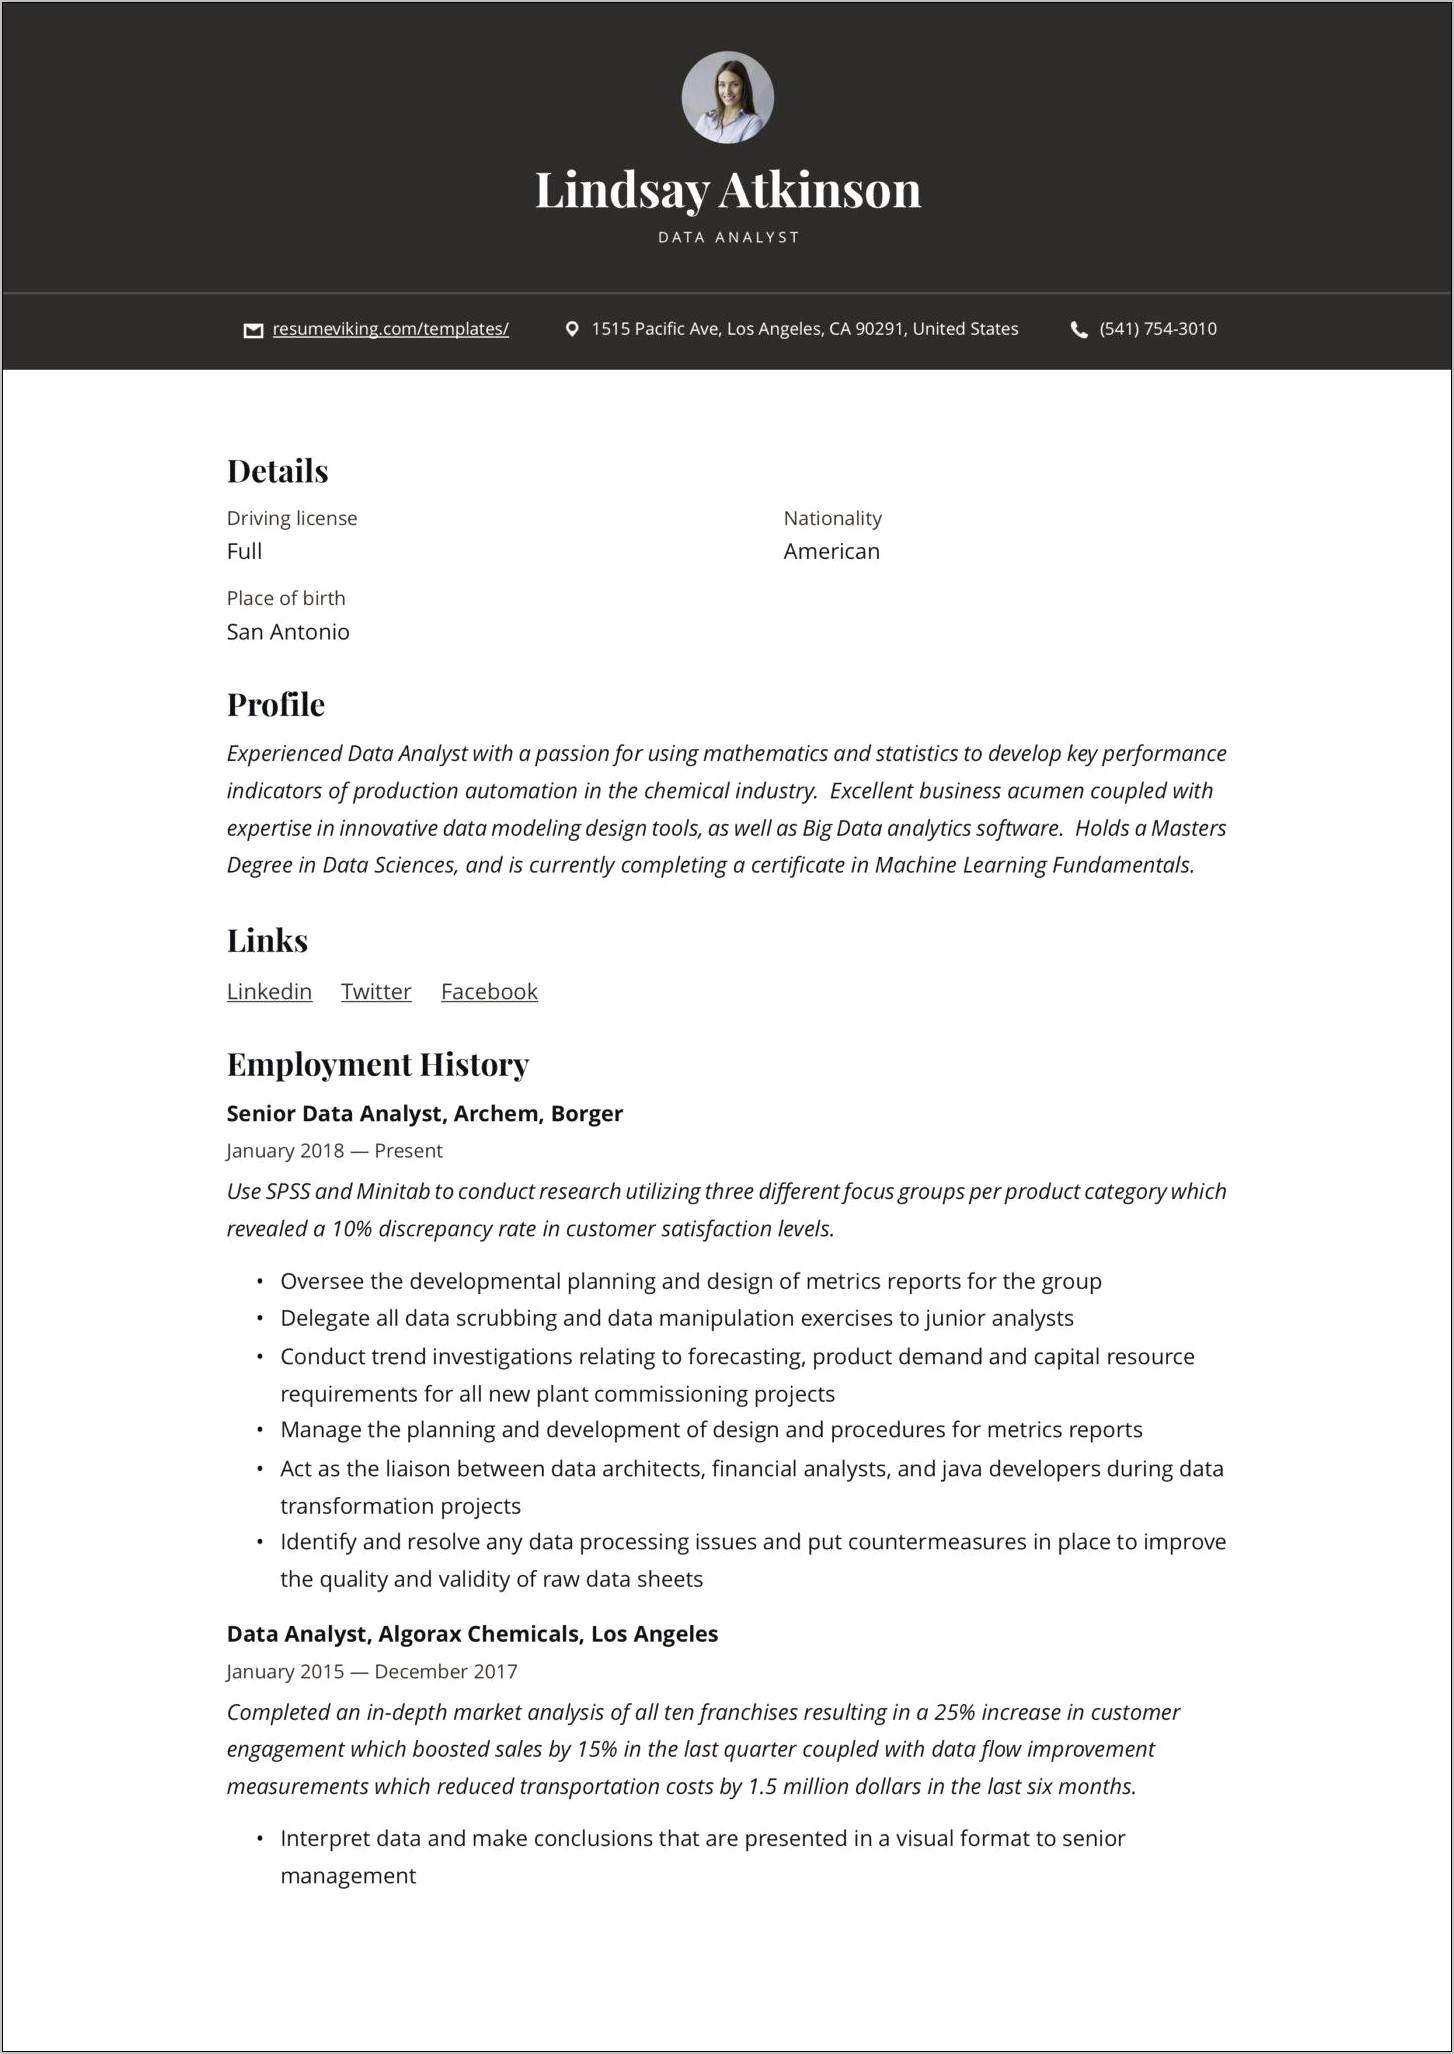 Resume Job Objective Data Analyst